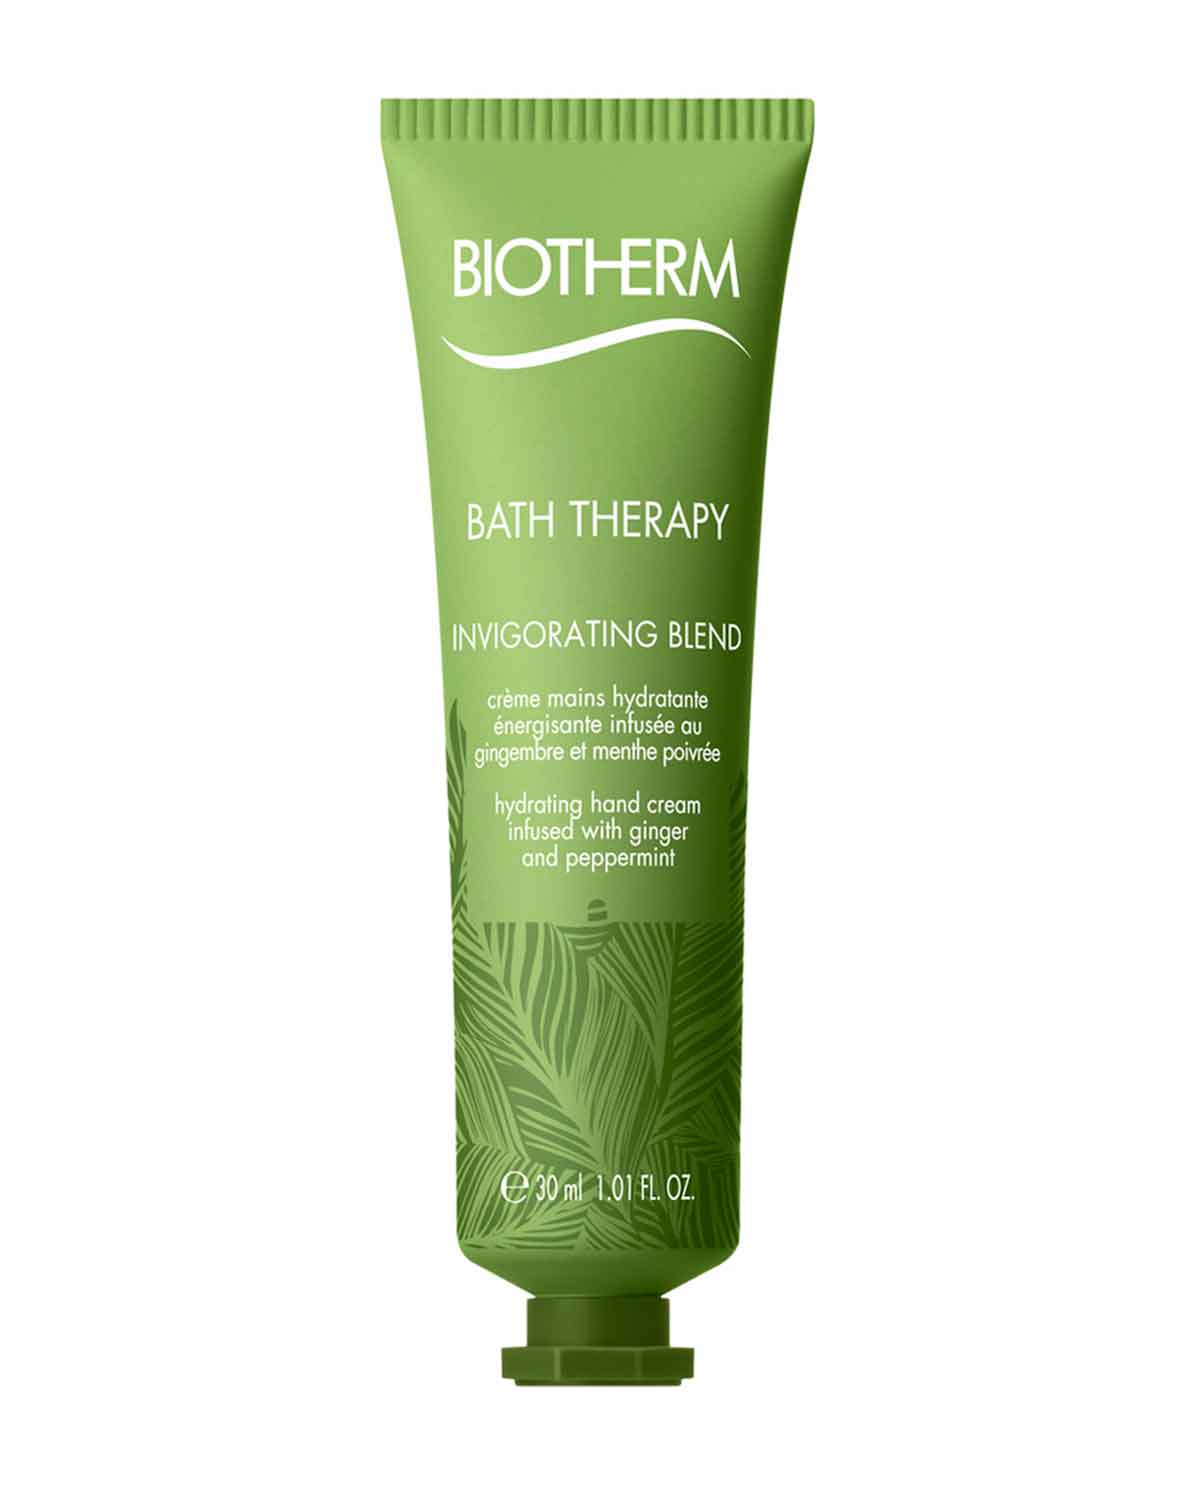 crema-de-manos-bath-therapy-invigorating-blend-30-ml-biotherm-10